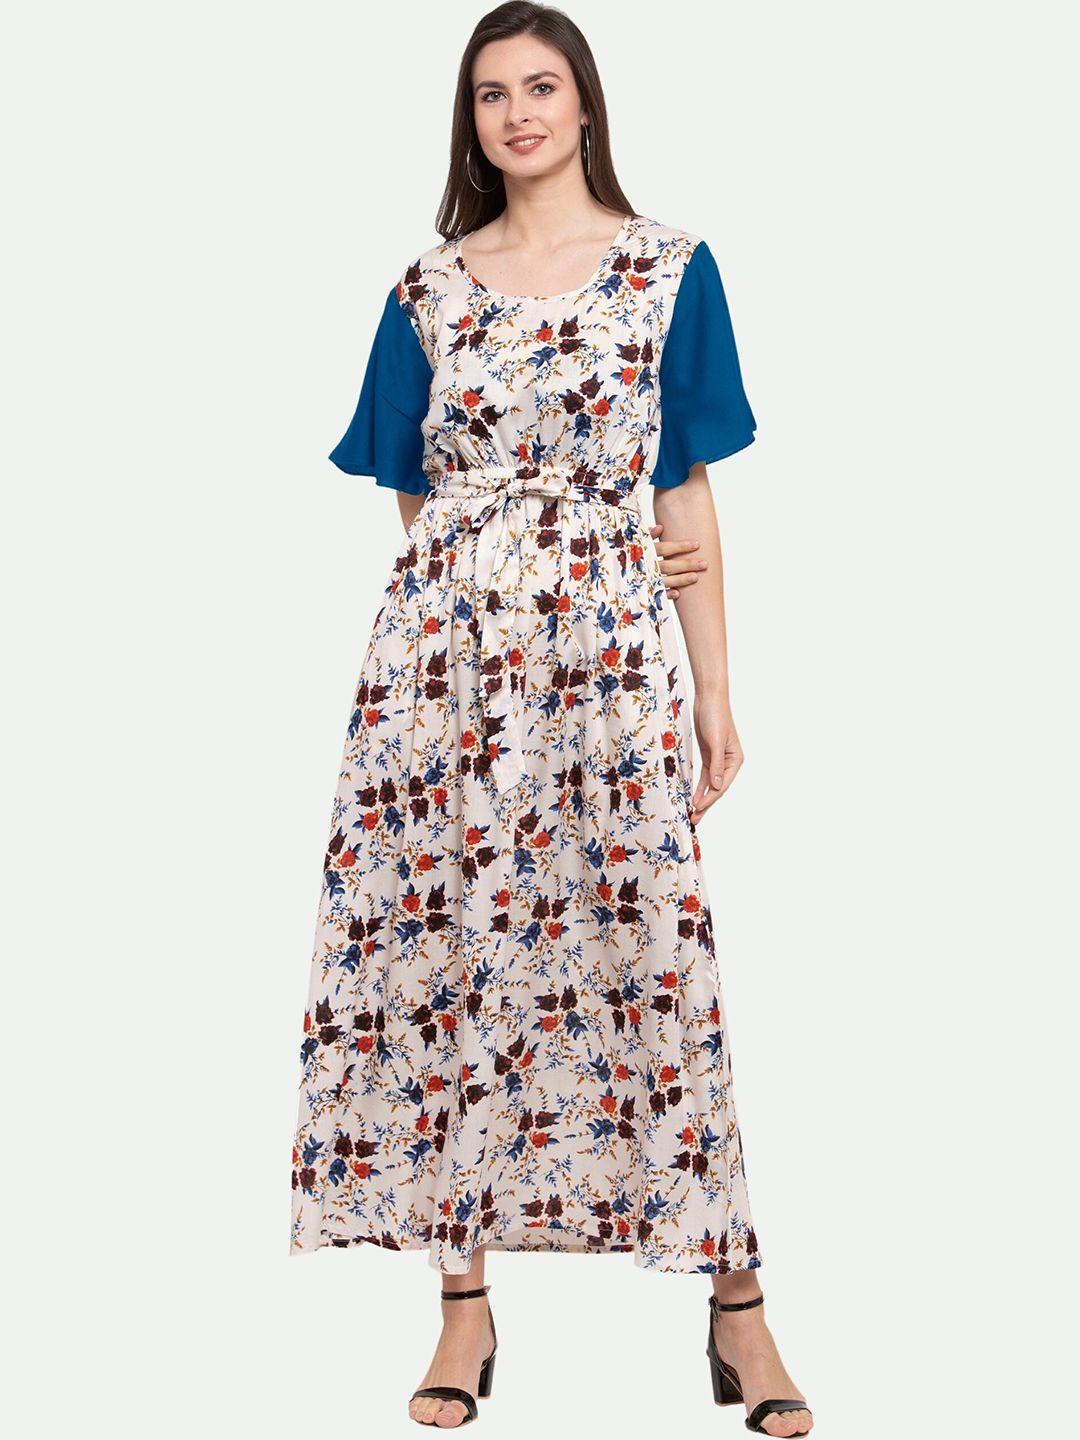 patrorna women floral printed cotton blend a-line maxi dress